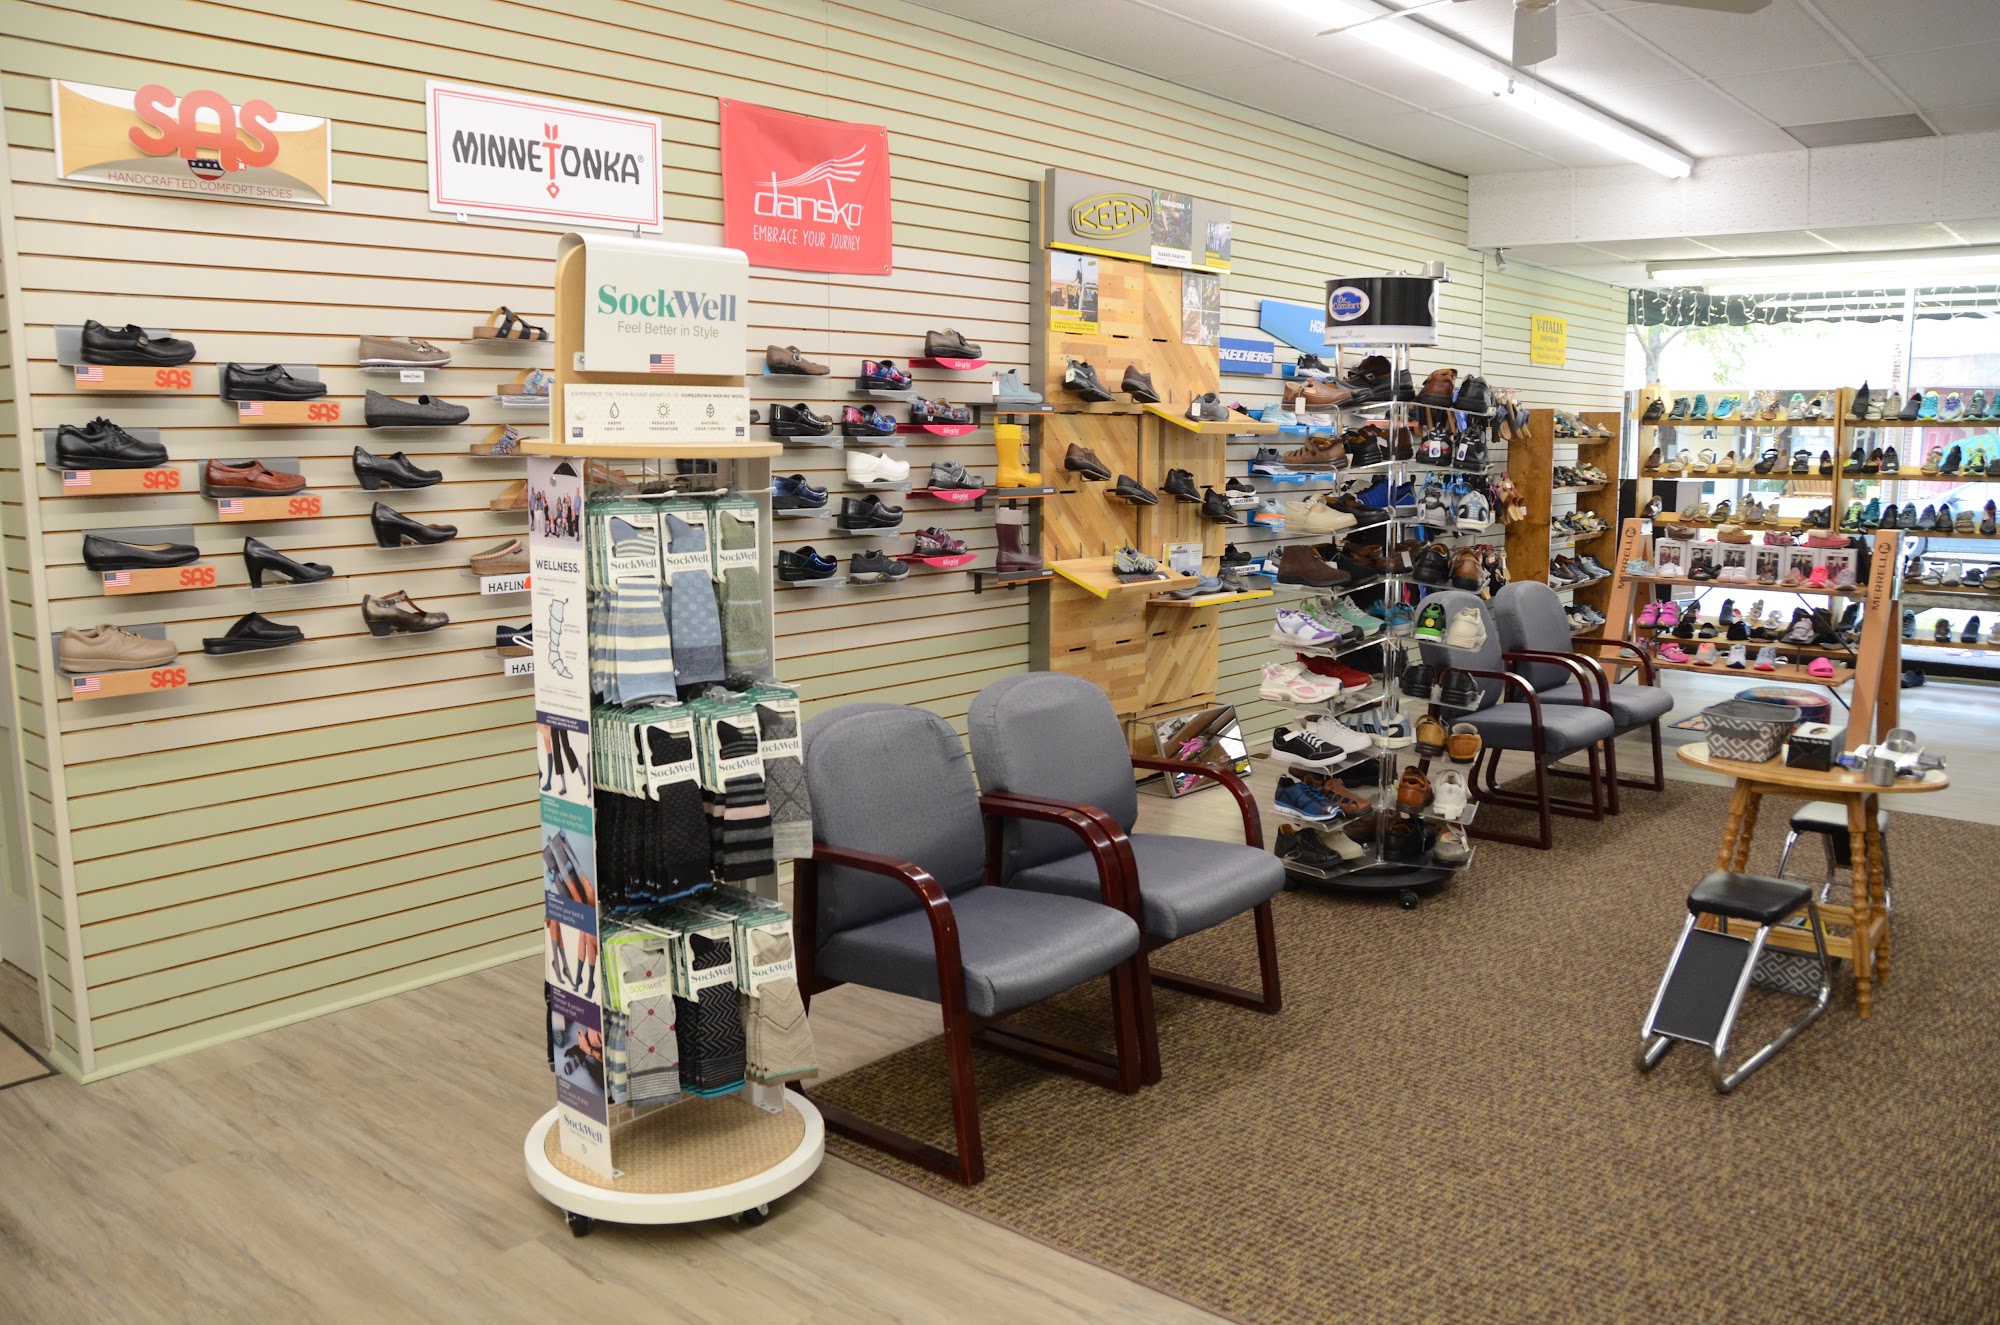 Tindell Shoes, Inc. 24 S Frederick Ave, Oelwein Iowa 50662